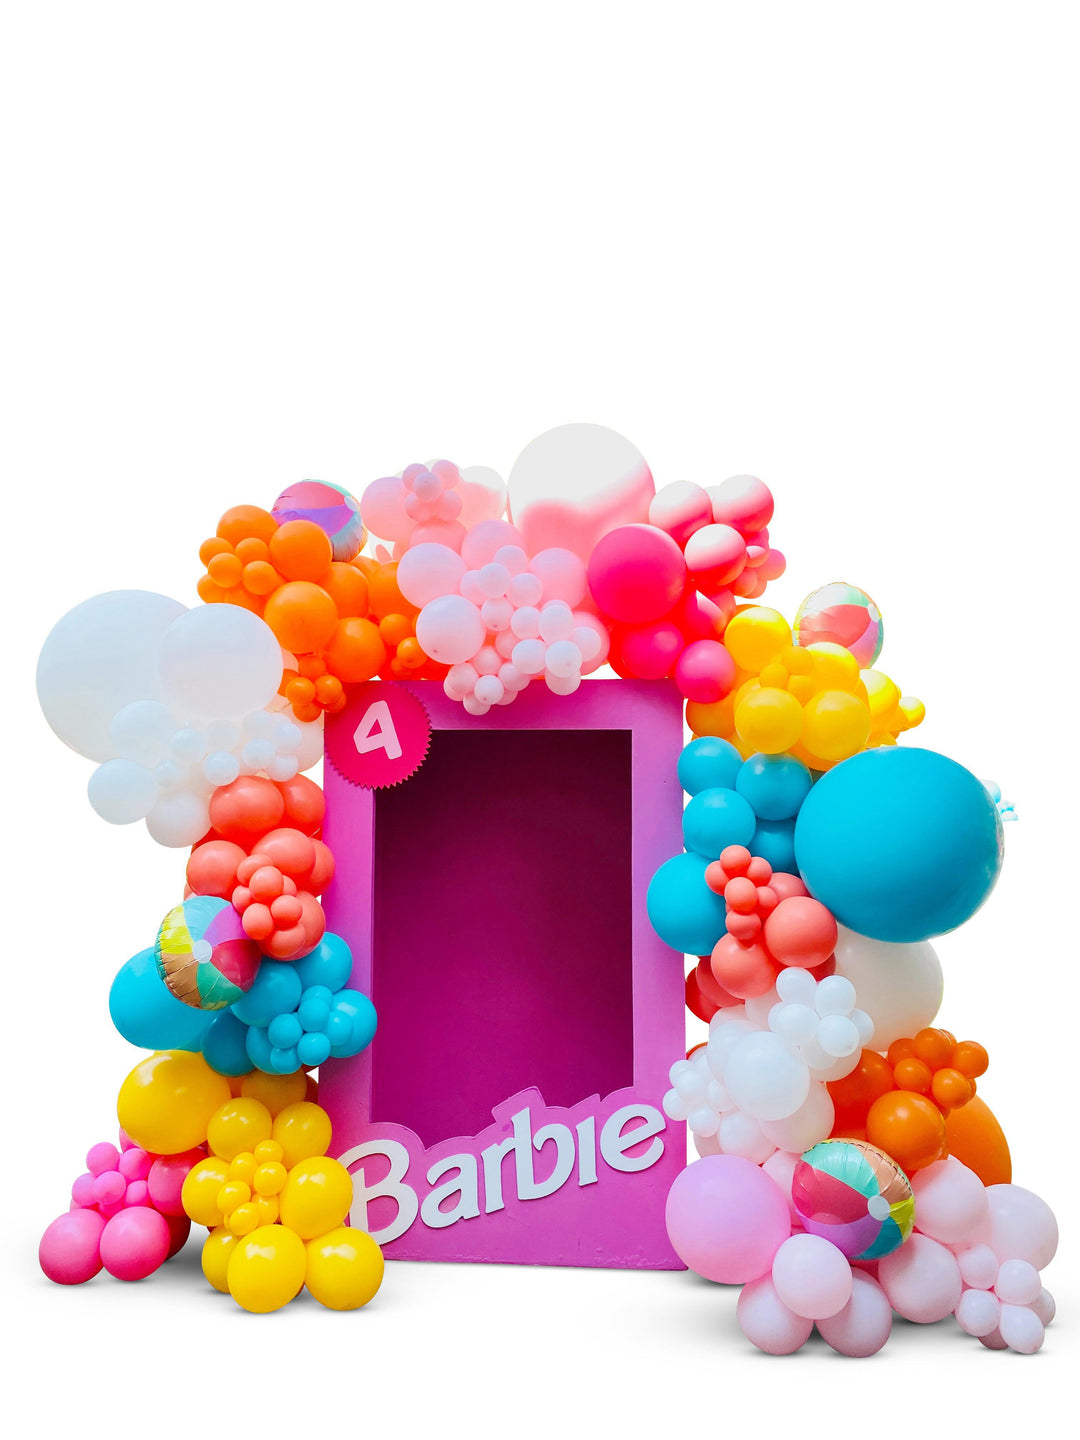 barbie box balloons